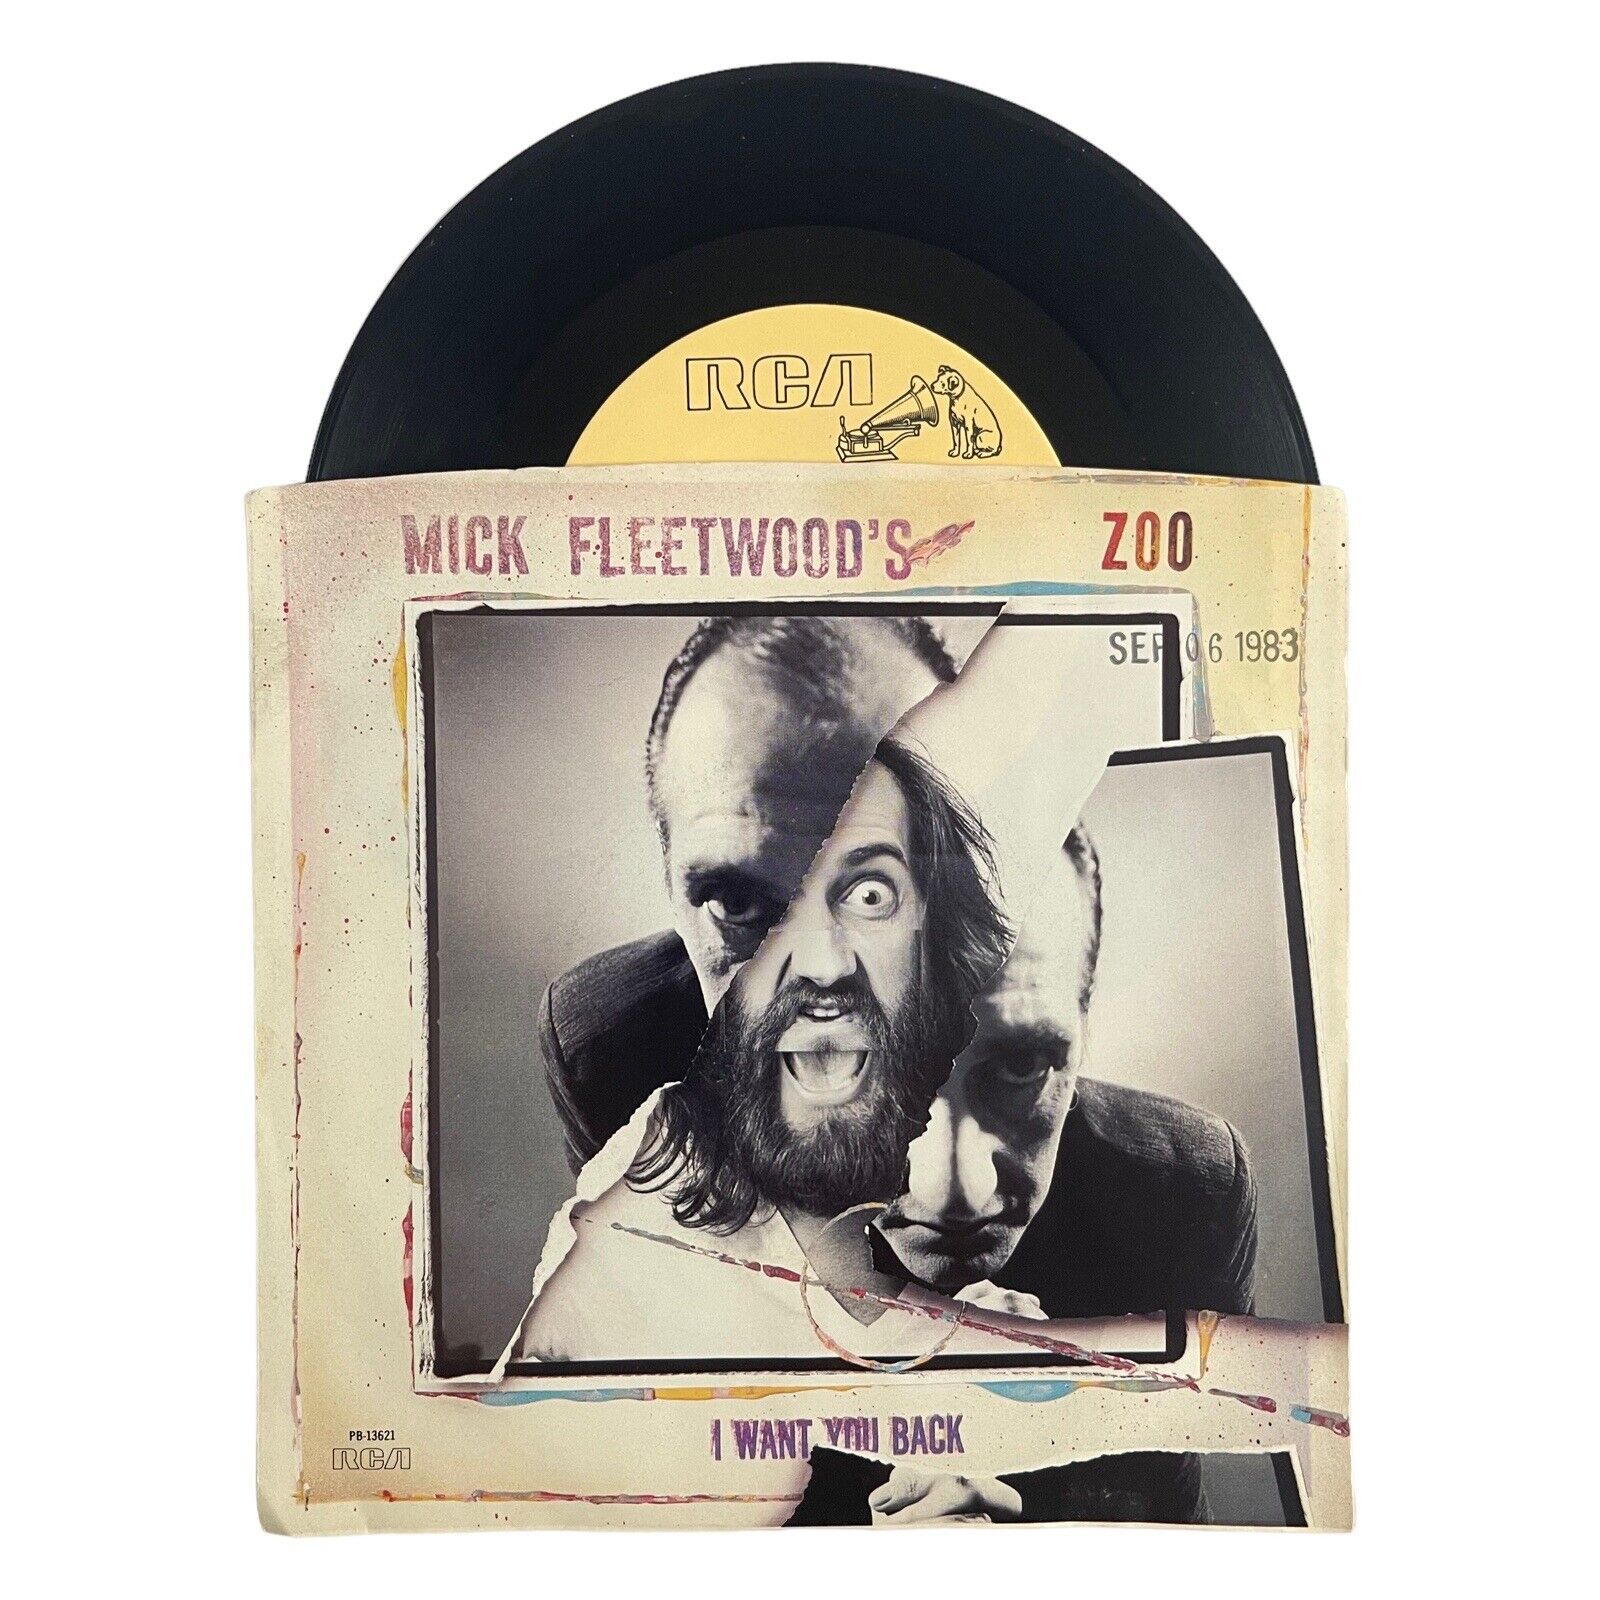 Mick Fleetwood's Zoo - I Want You Back (1983) 7